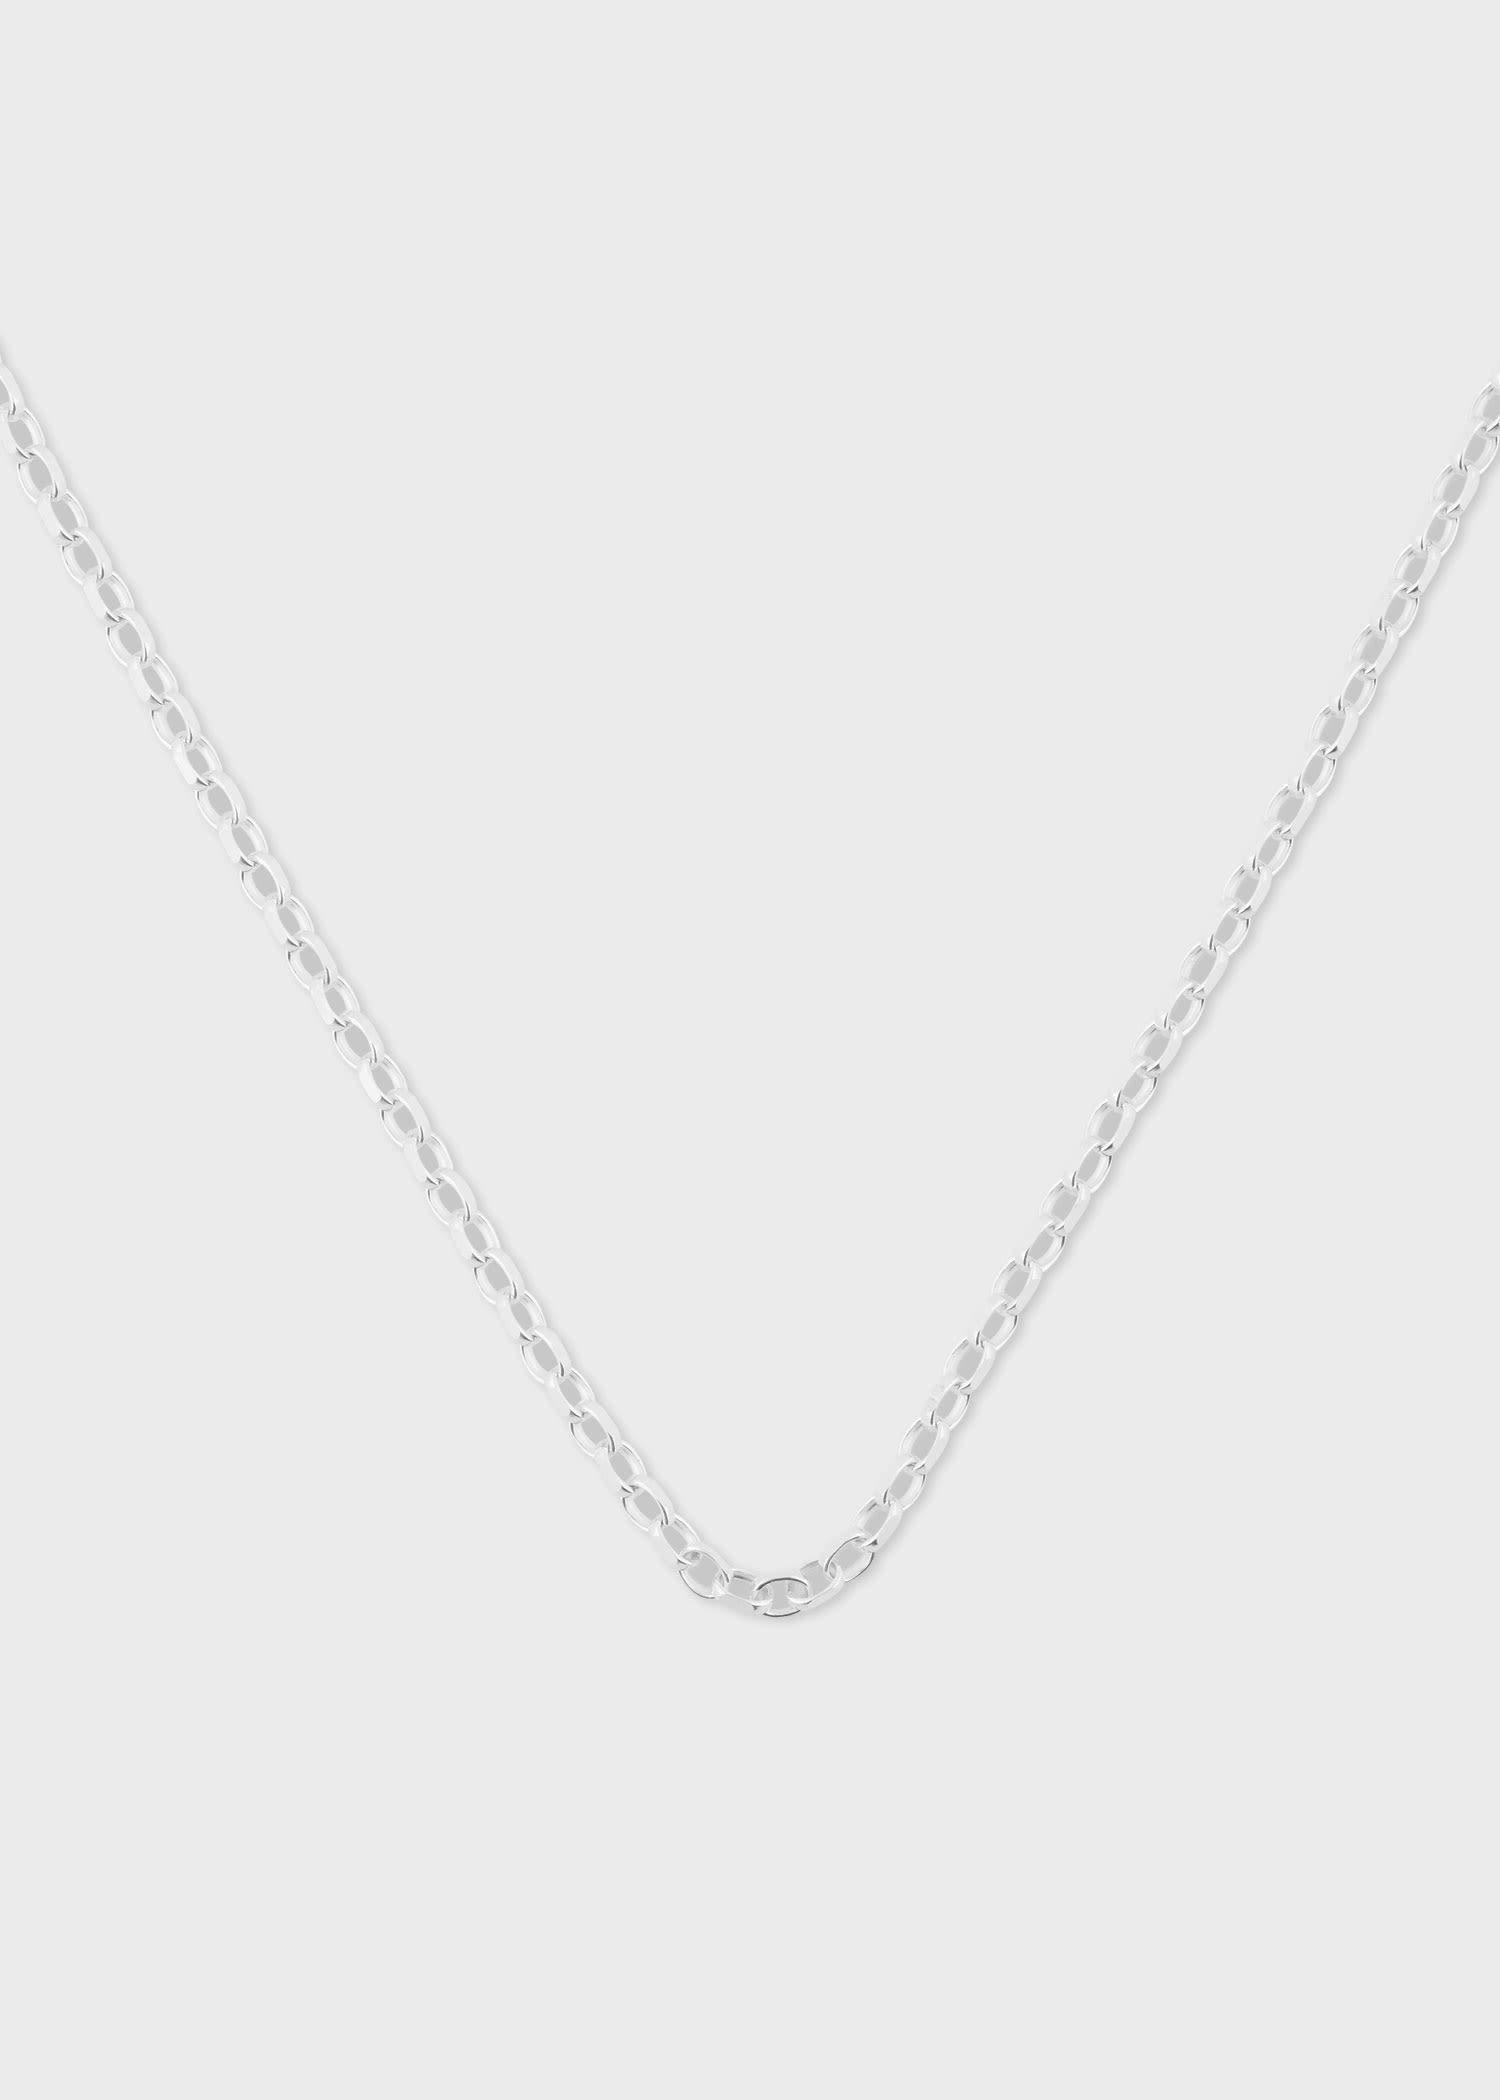 Diamond-Cut Chain Necklace by Aurum LDN - 1